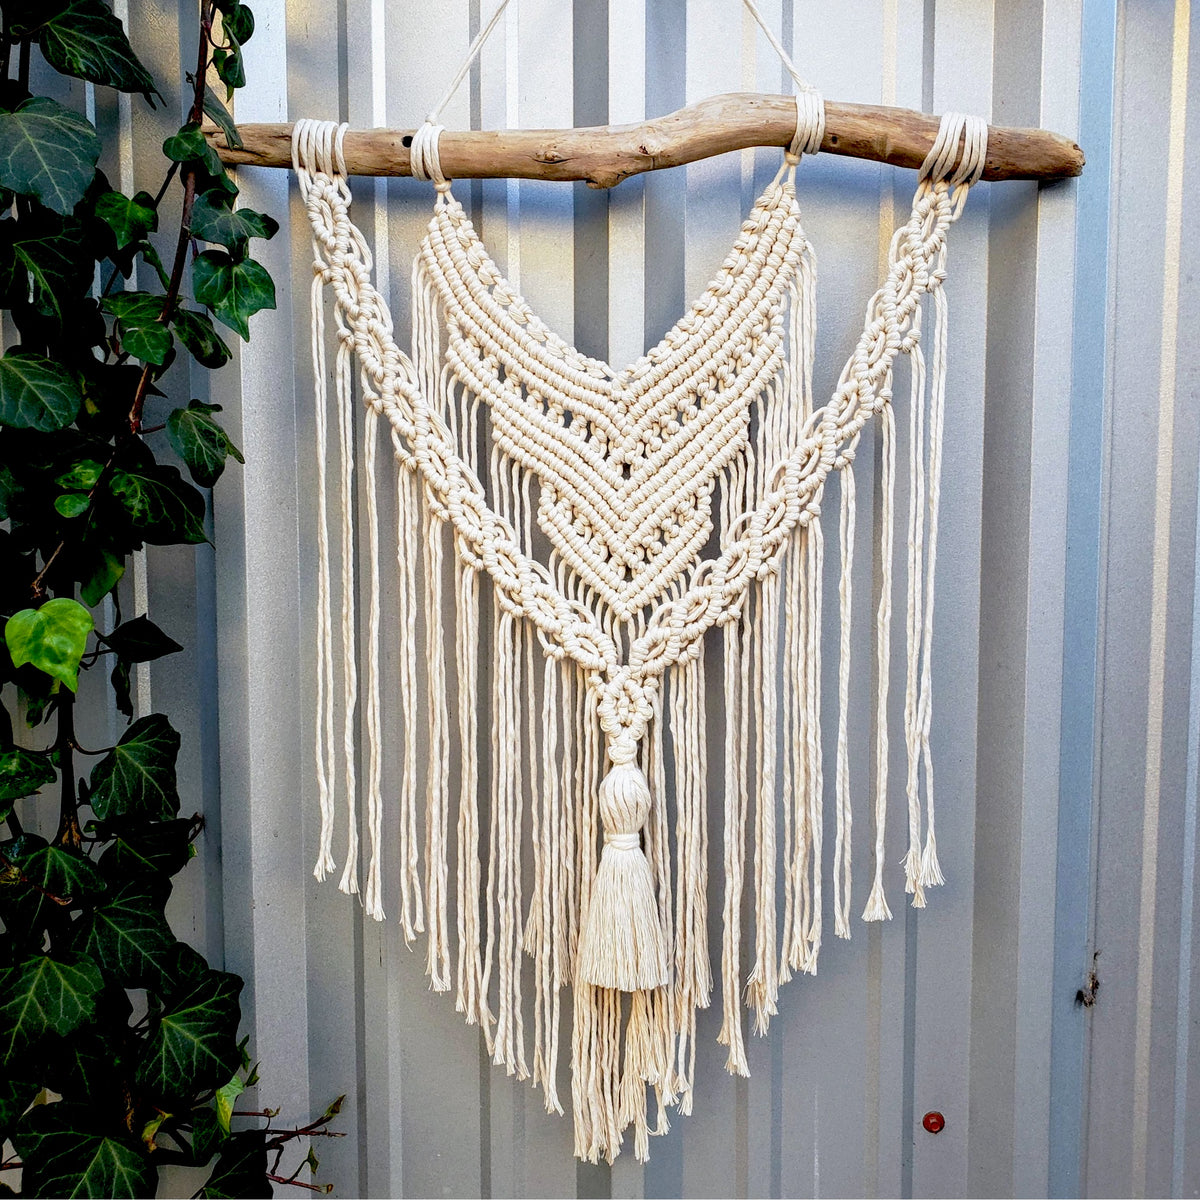 Macra-Weave Wall Hanging Workshop for Beginners+